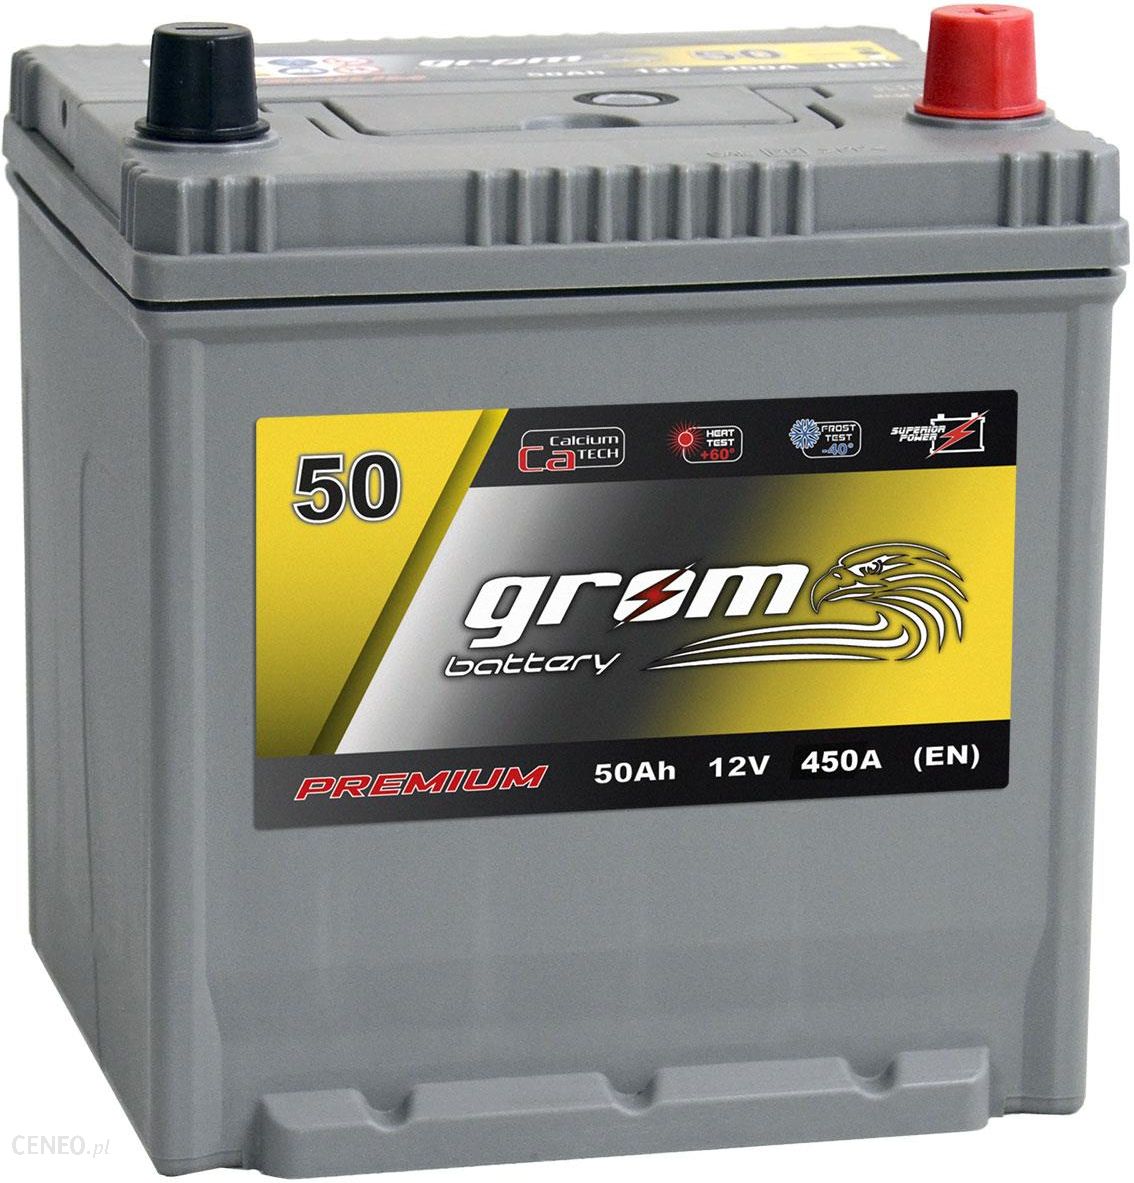 Akumulator GROM AGM START&STOP 70Ah 760A Prawy Plus